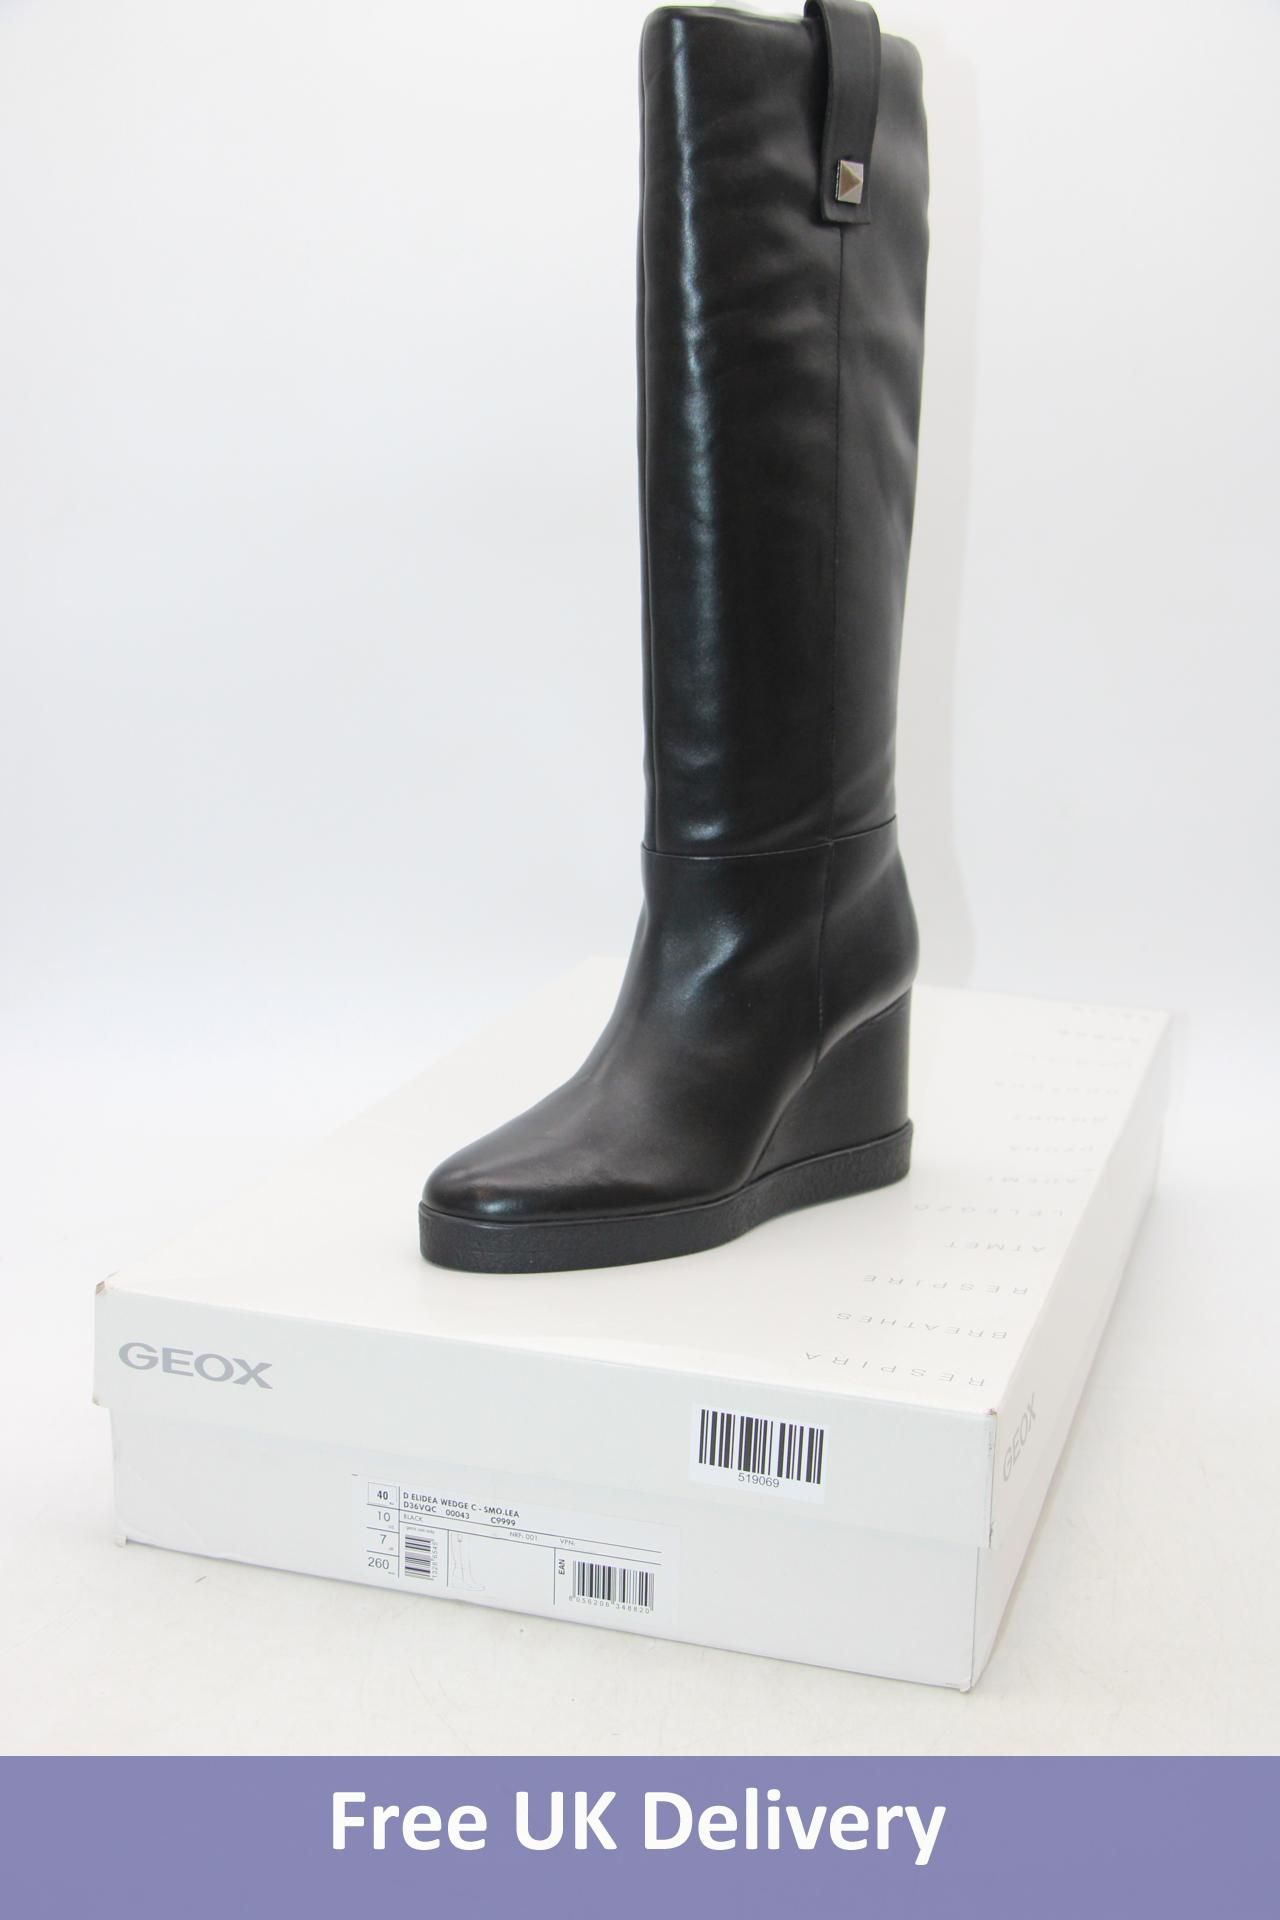 Geox Elidea Wedge Boot, Black, Size UK 7